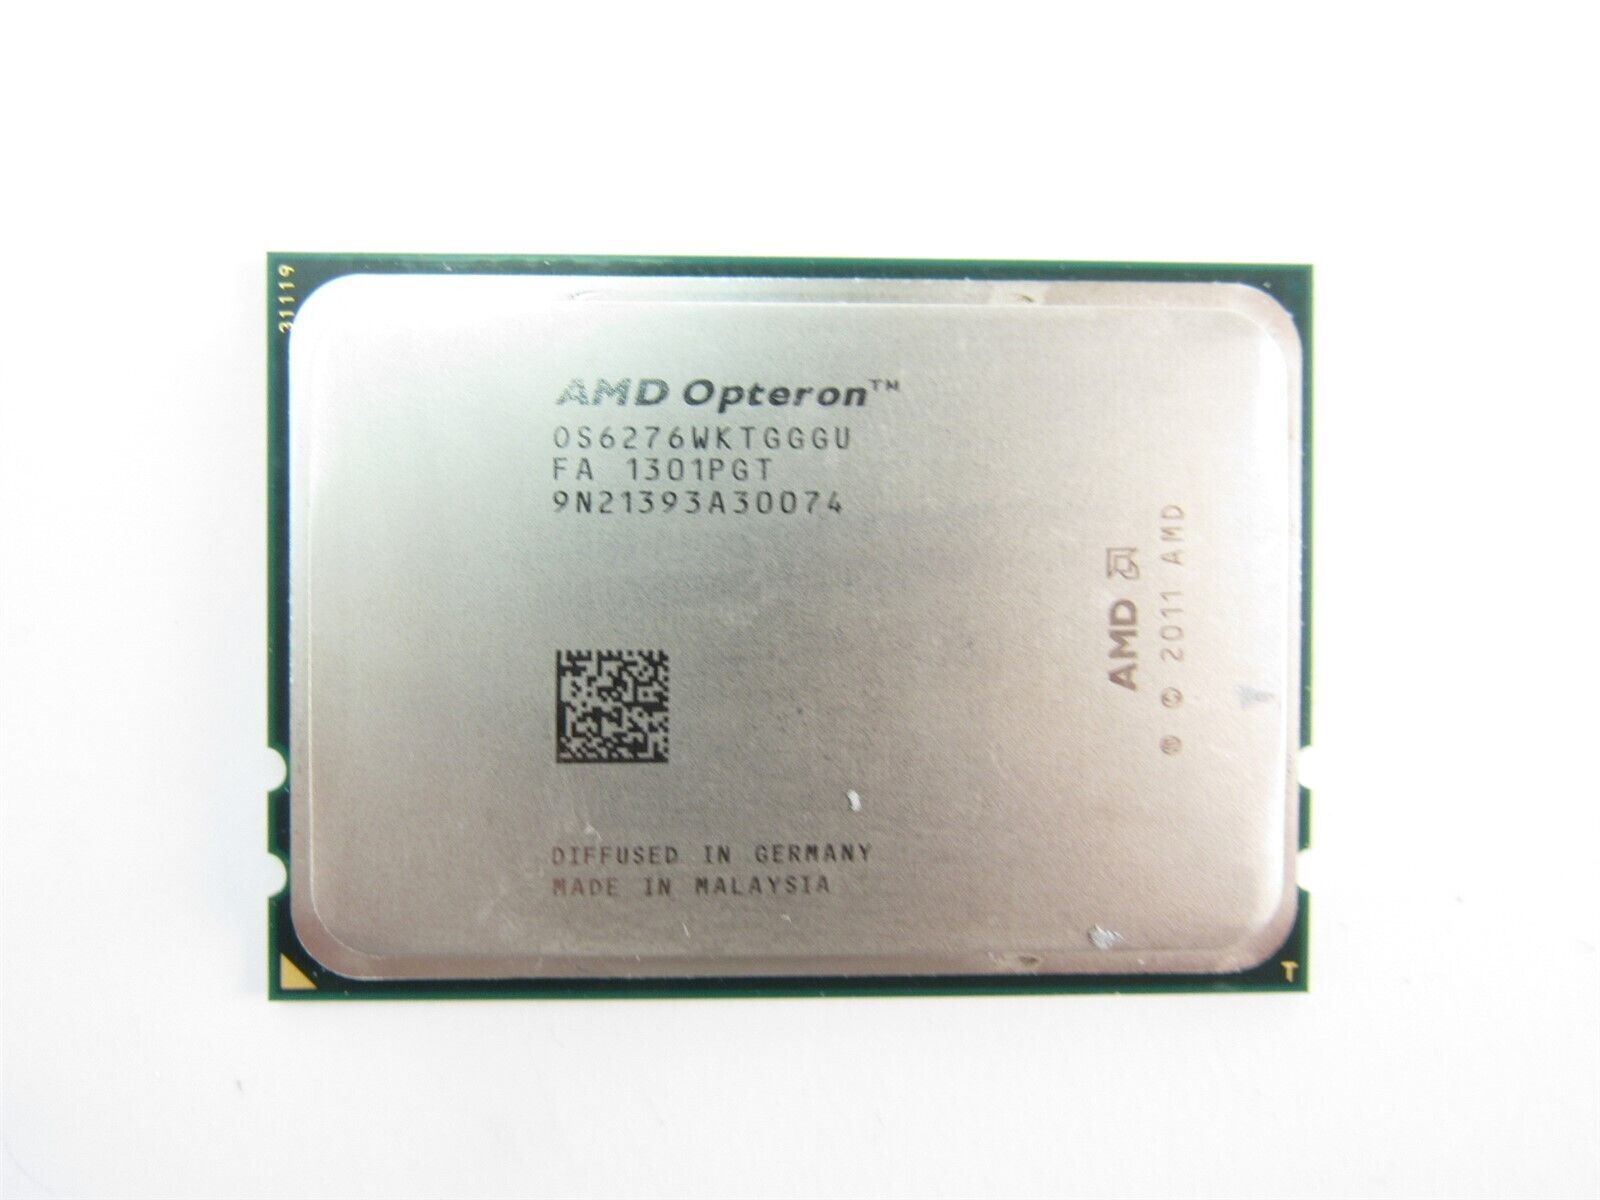 8x AMD Opteron 6276 OS6276WKTGGGU 2.30GHz 6C Socket G34 CPU Processor Lot